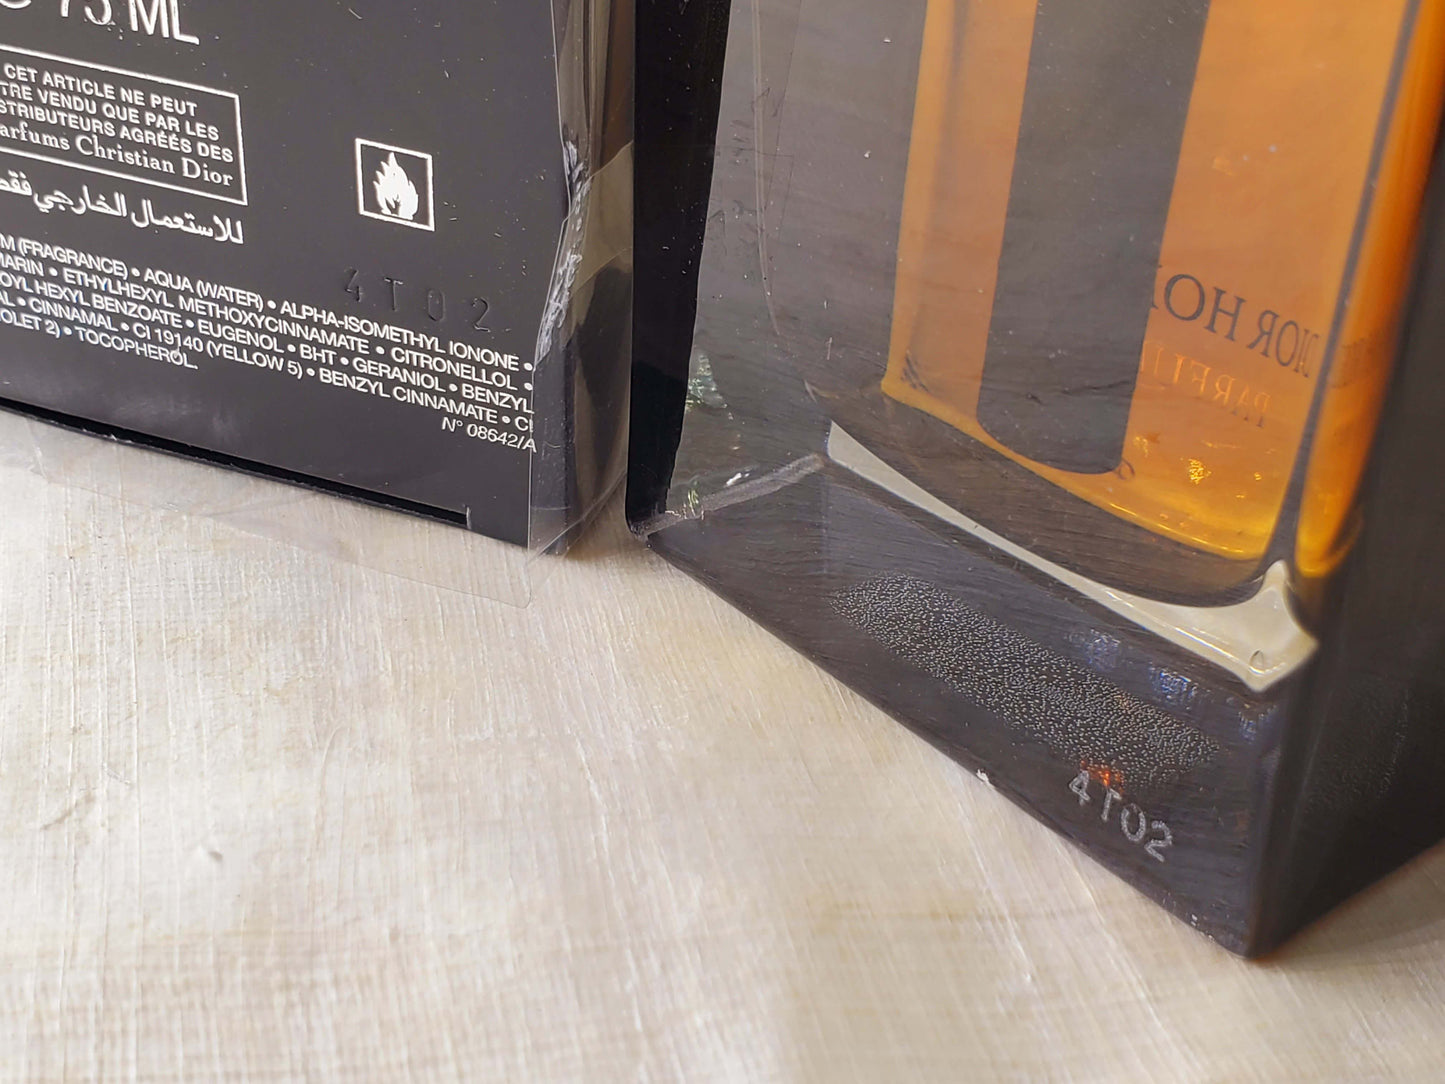 Dior Homme Parfum First Edition 2014 Christian Dior for men Spray EDP 75 ml 2.5 oz, Vintage, Rare, Sealed